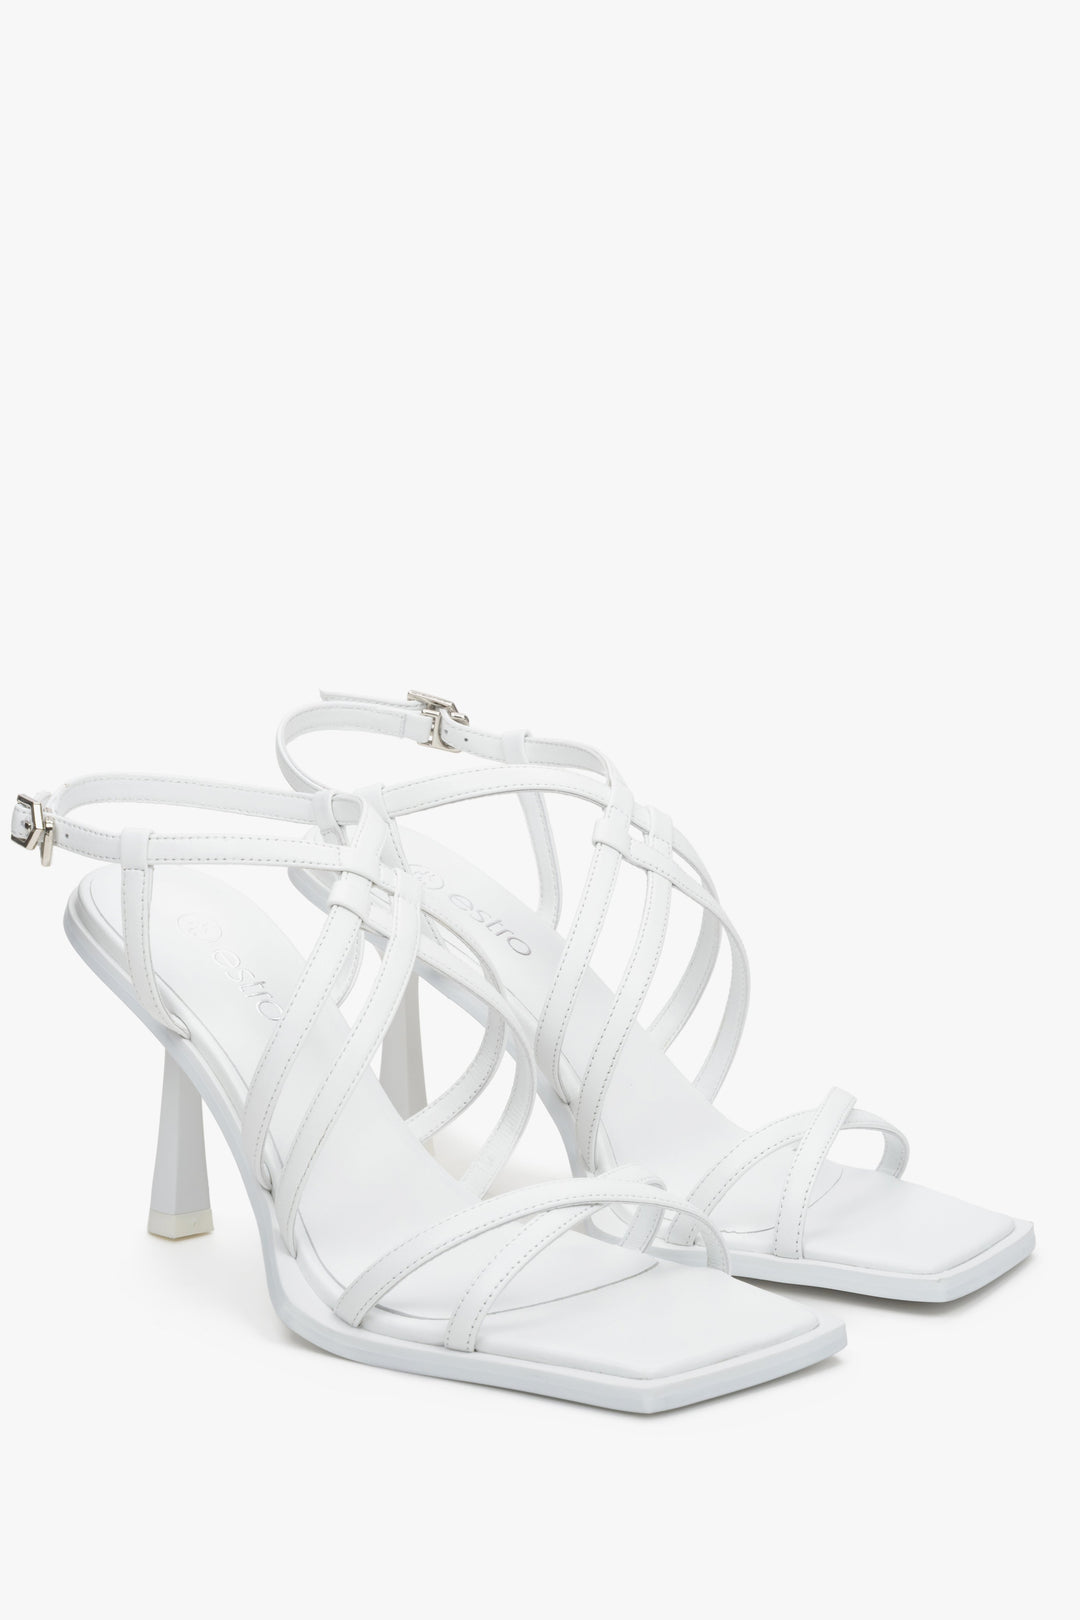 White women's strappy sandals on a funnel heel, Estro brand.